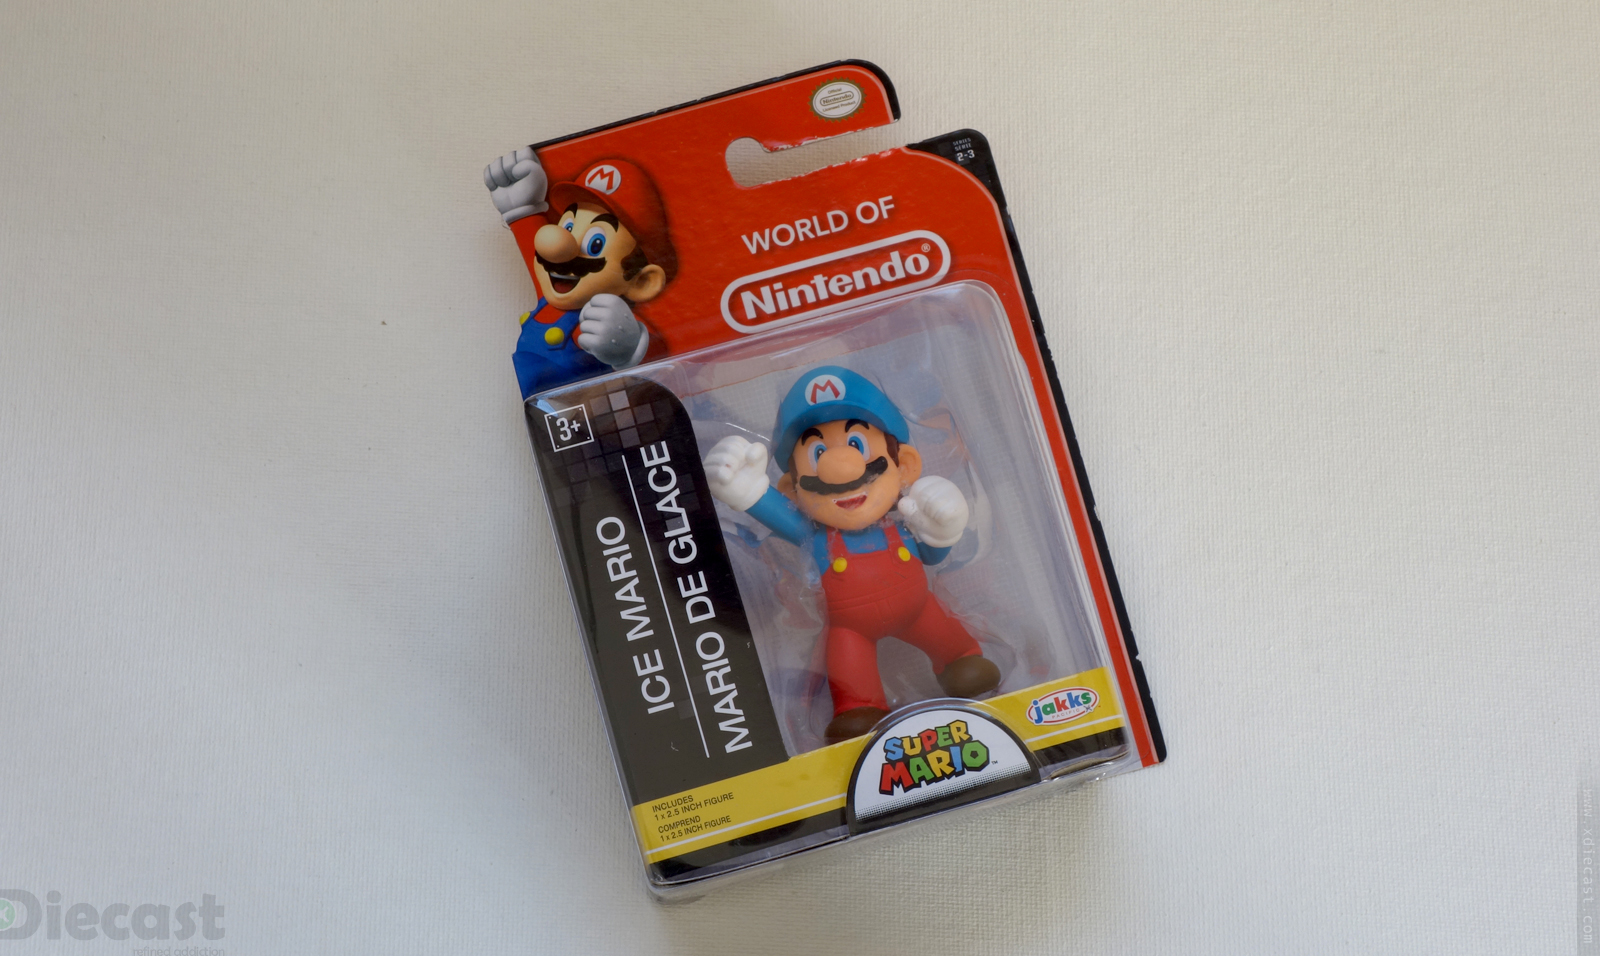 Nintendo Ice Mario - Package